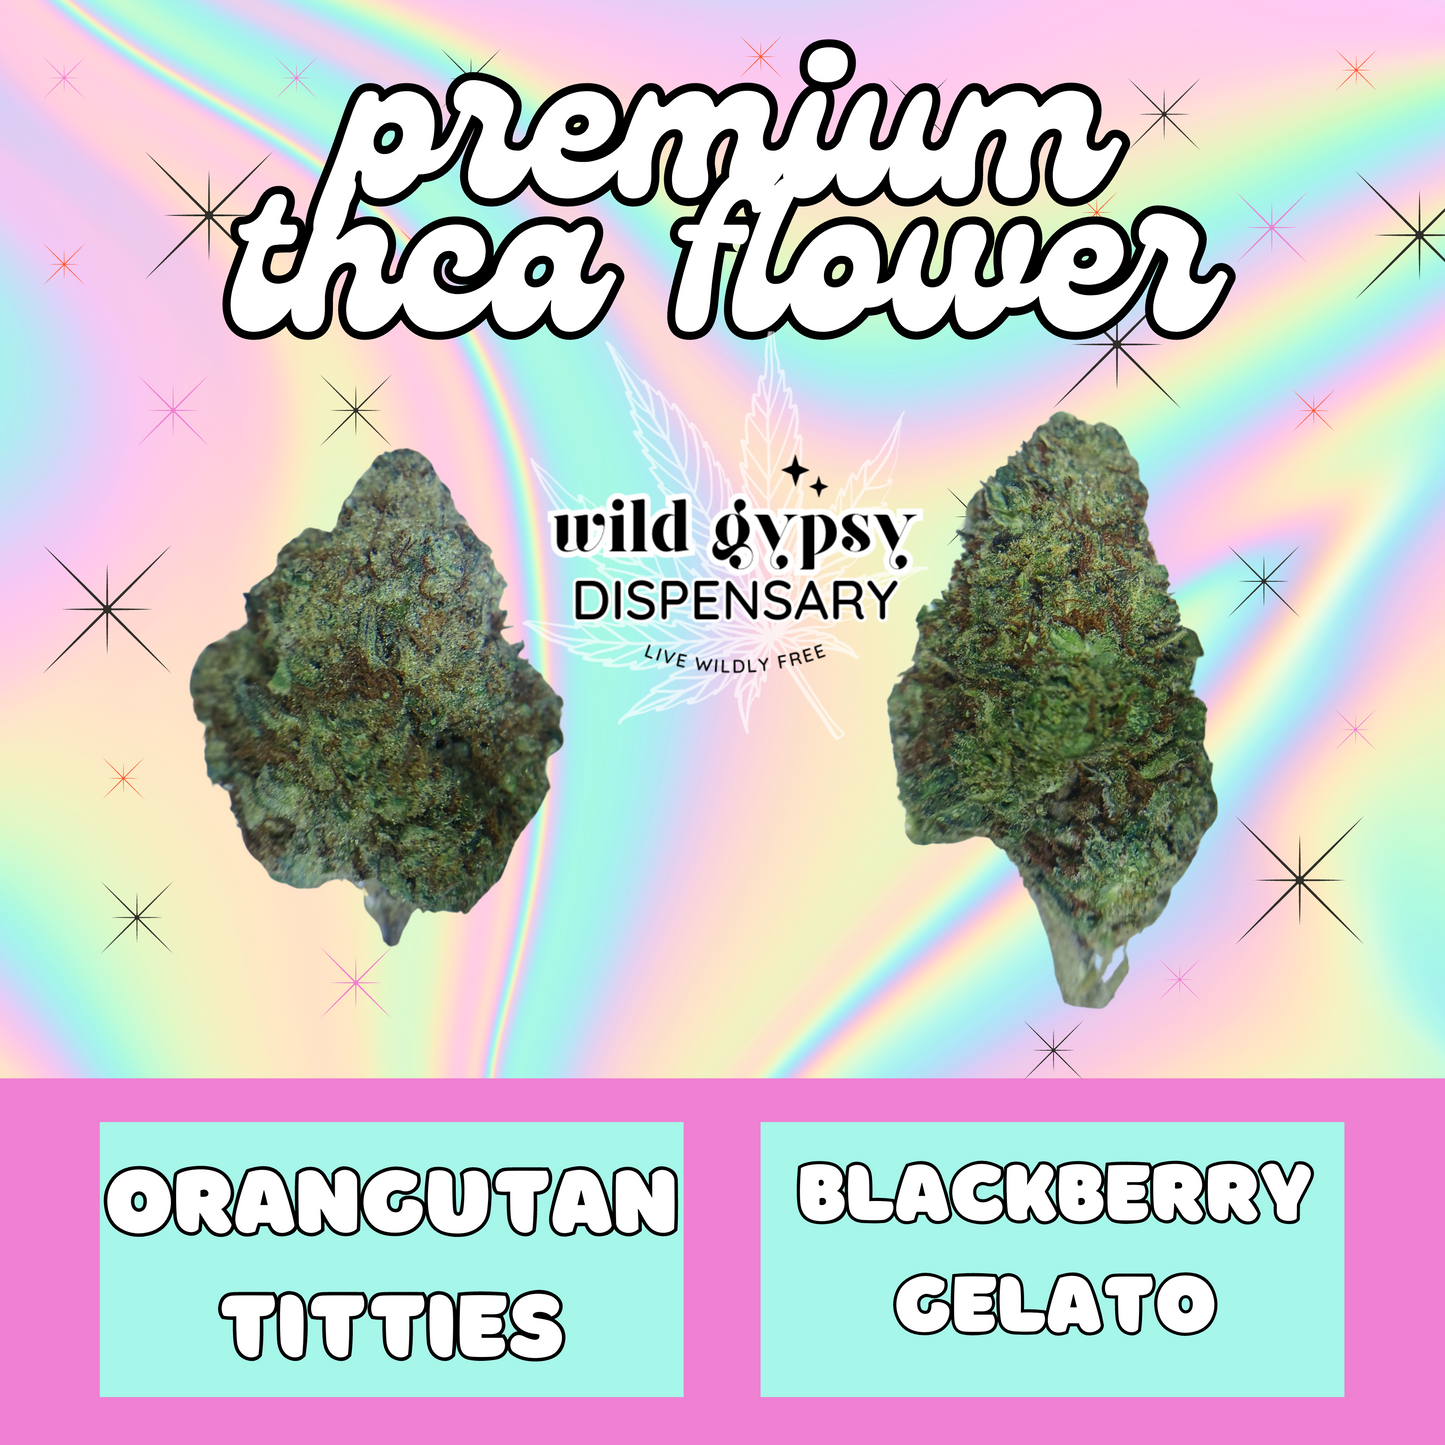 Premium THCA Flower - 3.5g. | Blackberry Gelato